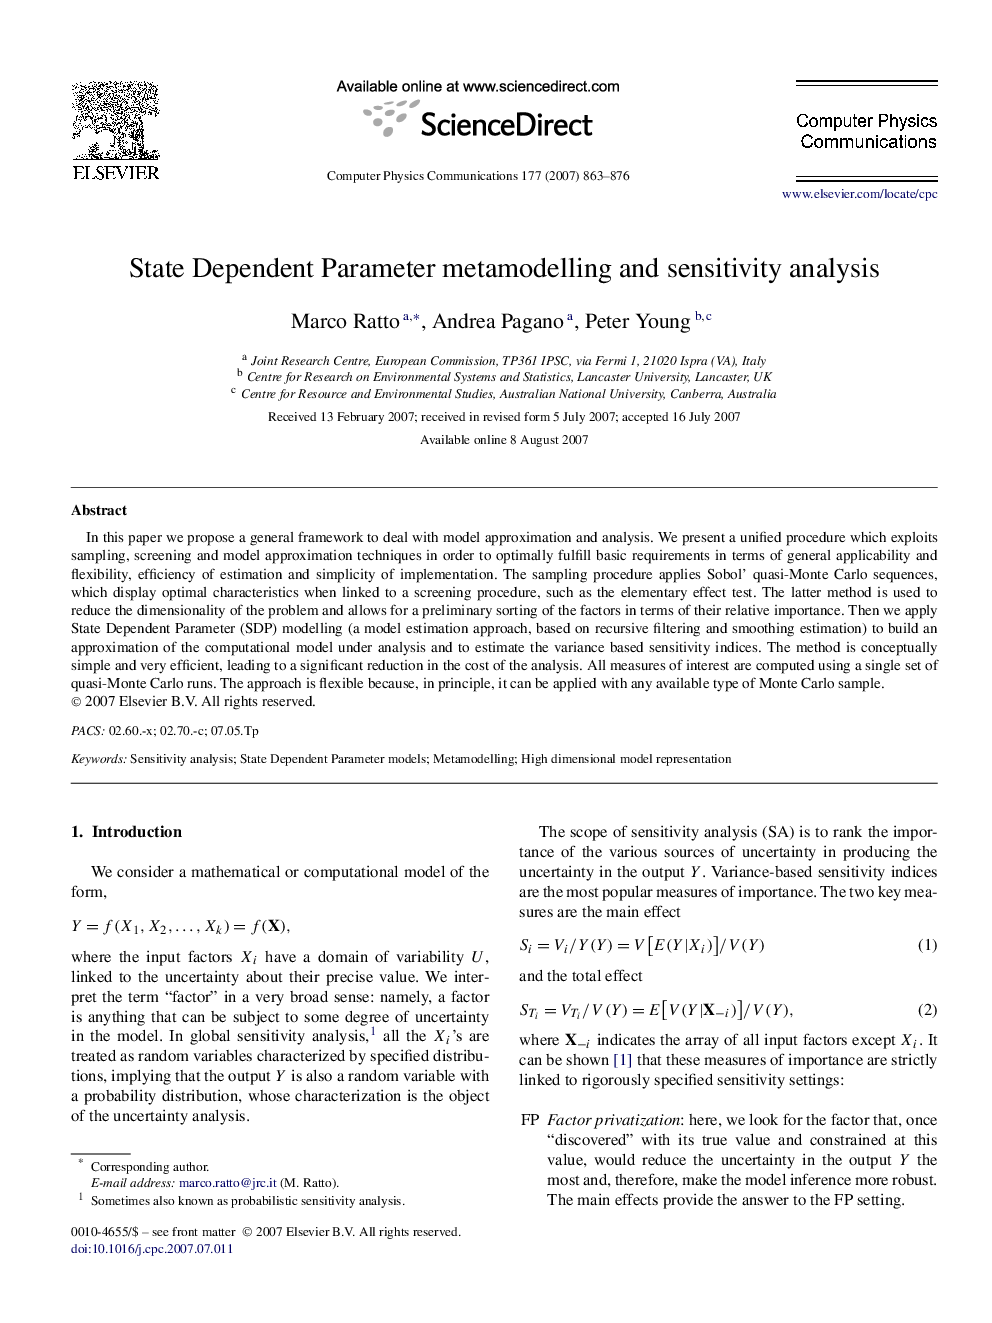 State Dependent Parameter metamodelling and sensitivity analysis